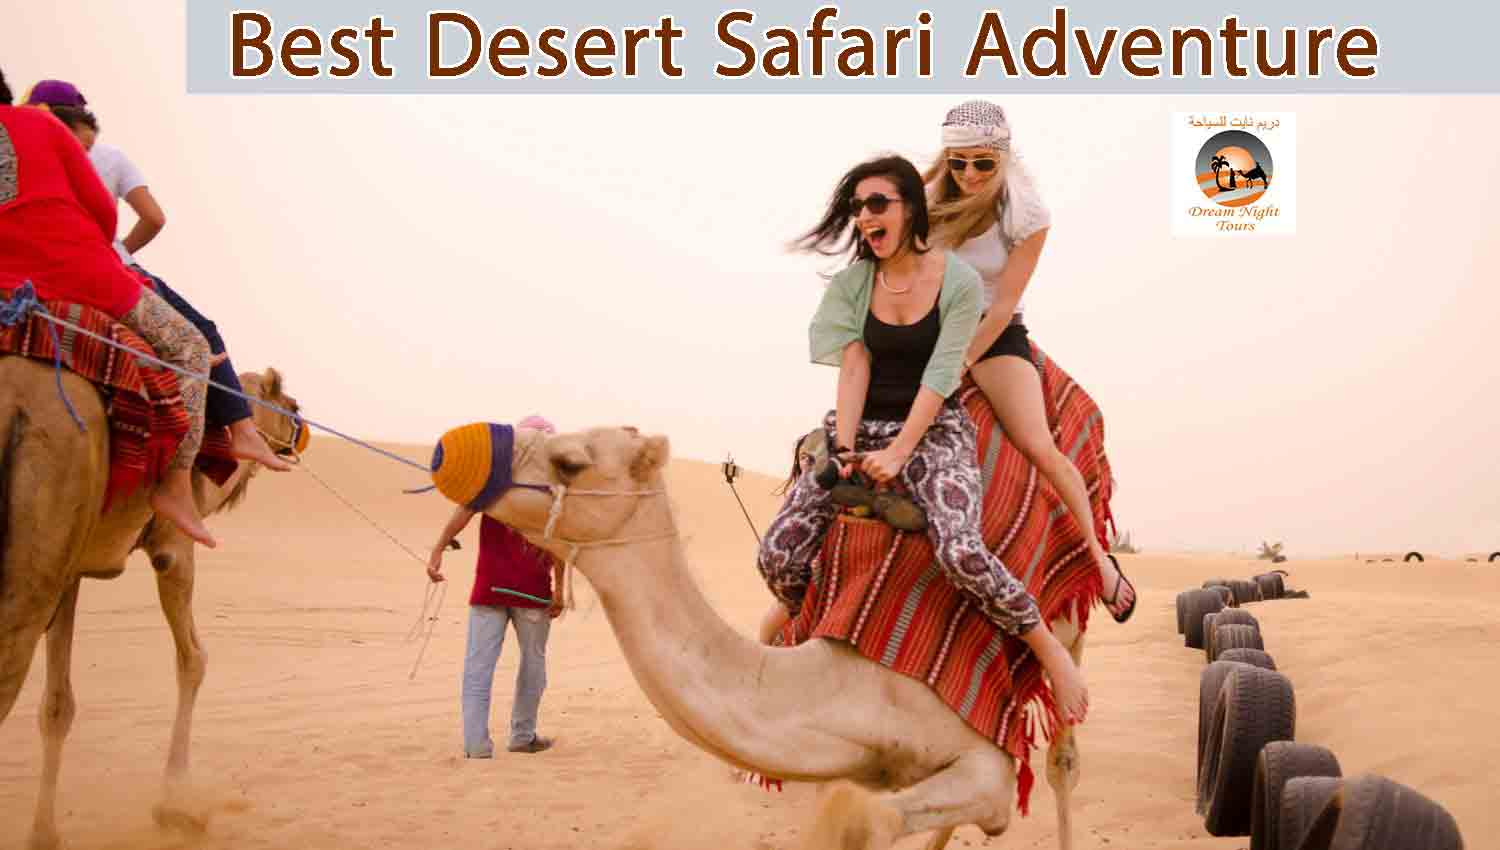 Camel Riding in Desert safari Deals